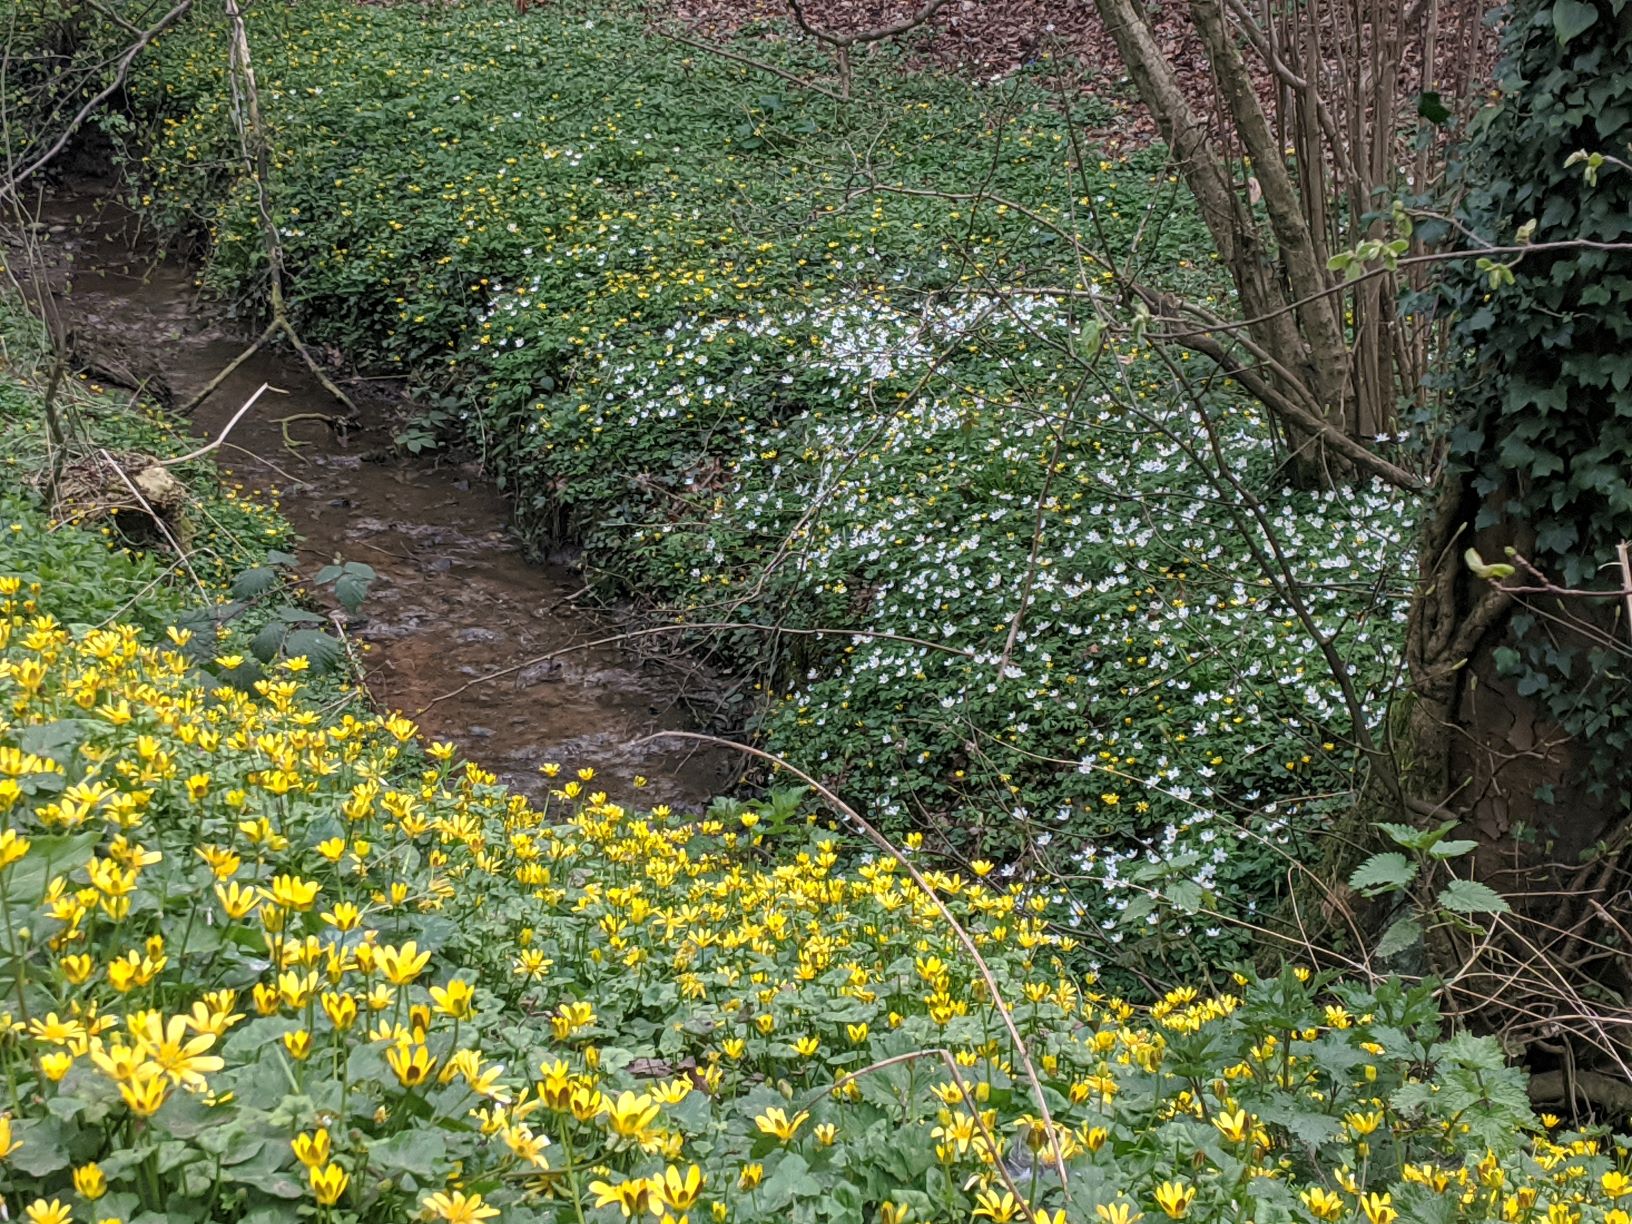 Swathe of Celandines in Mill Lane, April 4th 2020